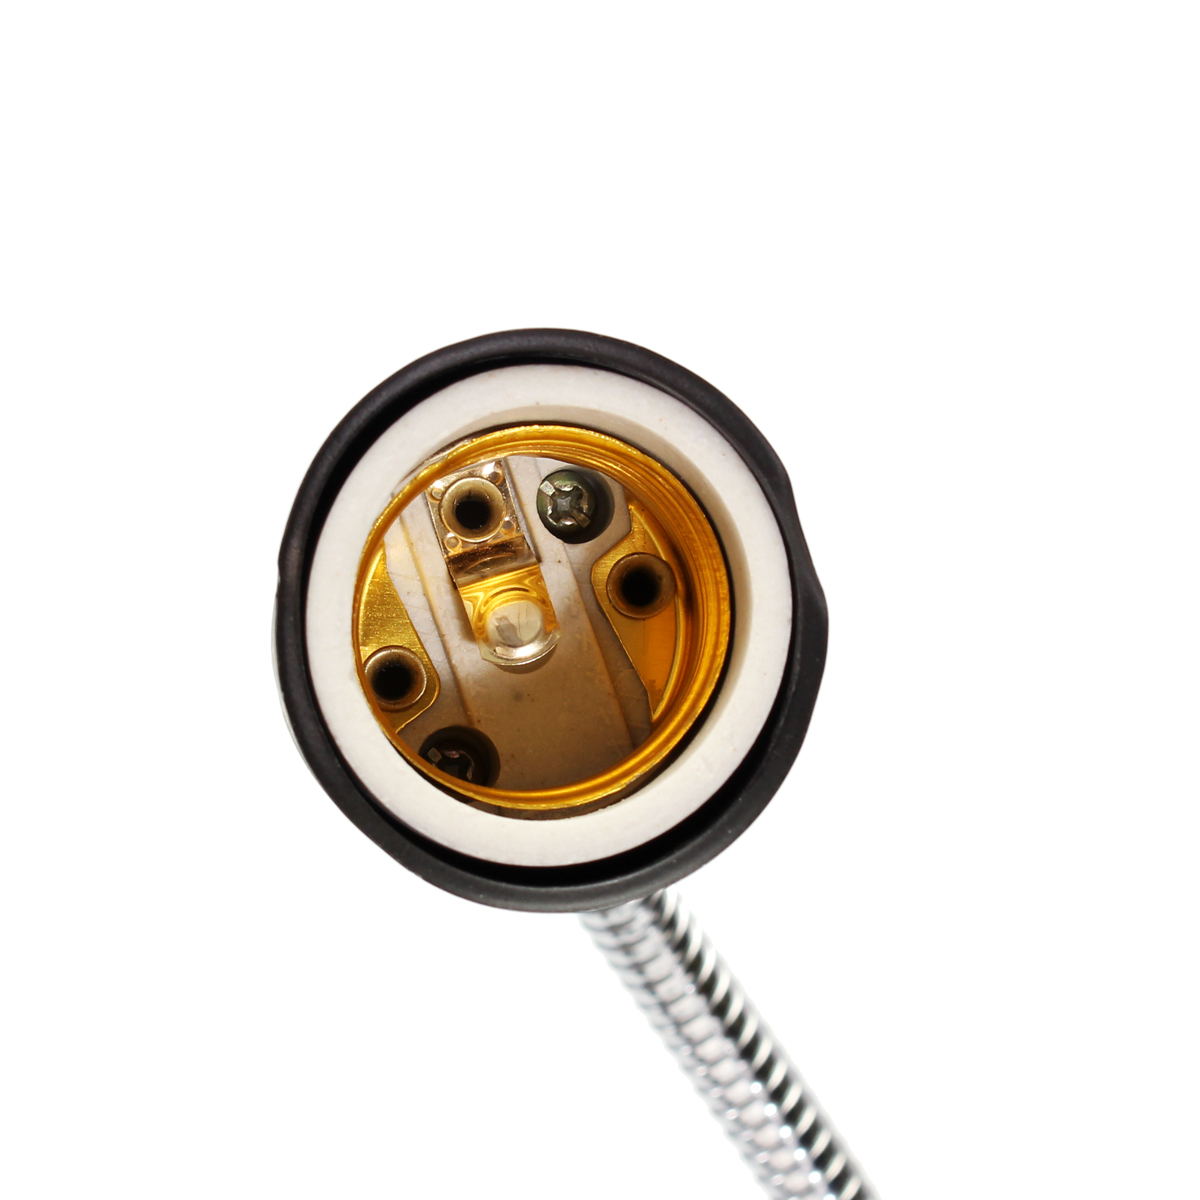 20CM-E27-Flexible-Pet-LED-Light-Lamp-Bulb-Adapter-Holder-Socket-with-Clip-On-Off-Switch-EU-US-Plug-1309557-3